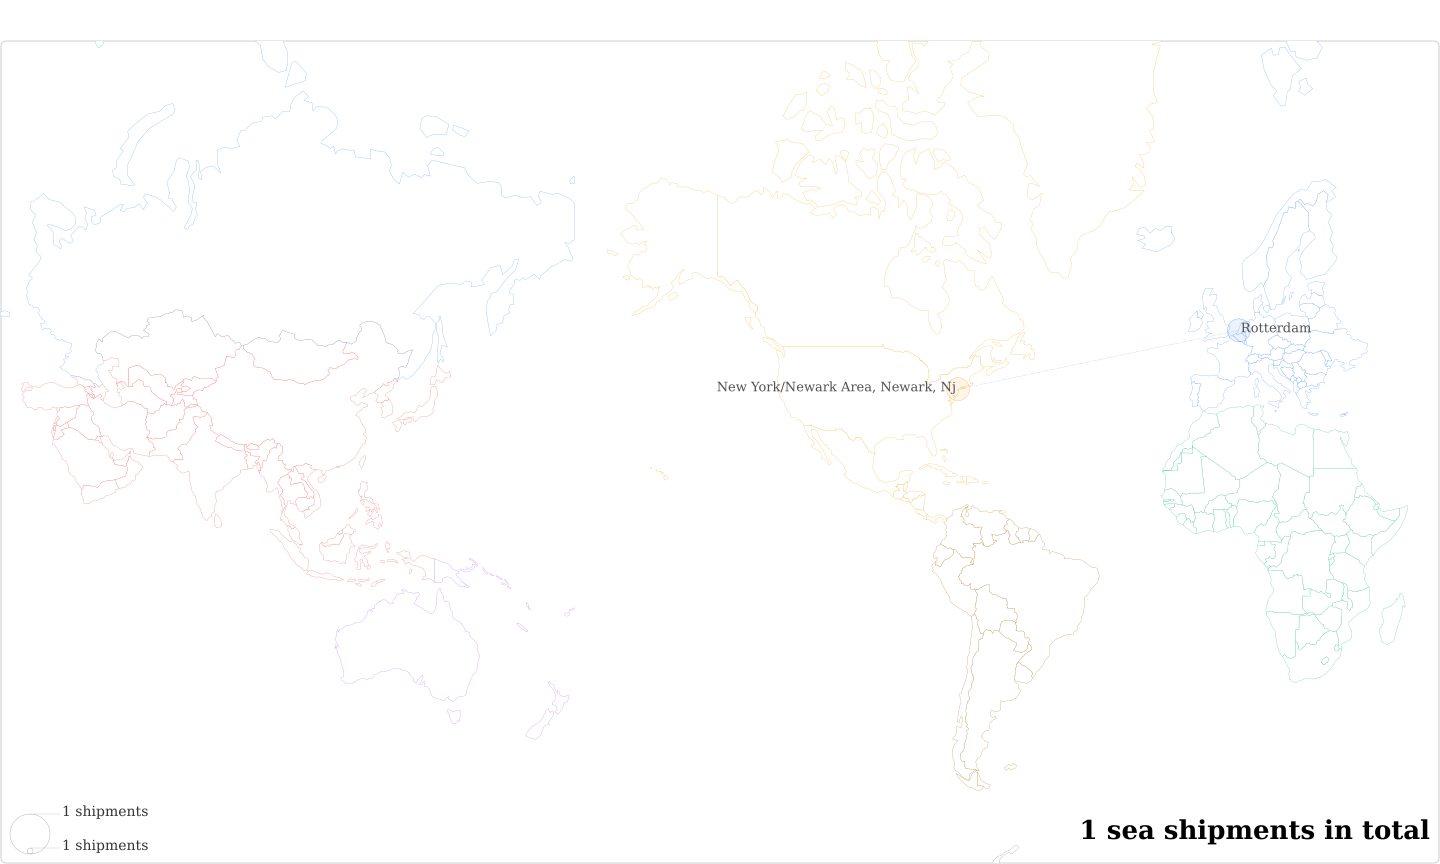 Kurt Peter Zoch's Imports Per Country Map